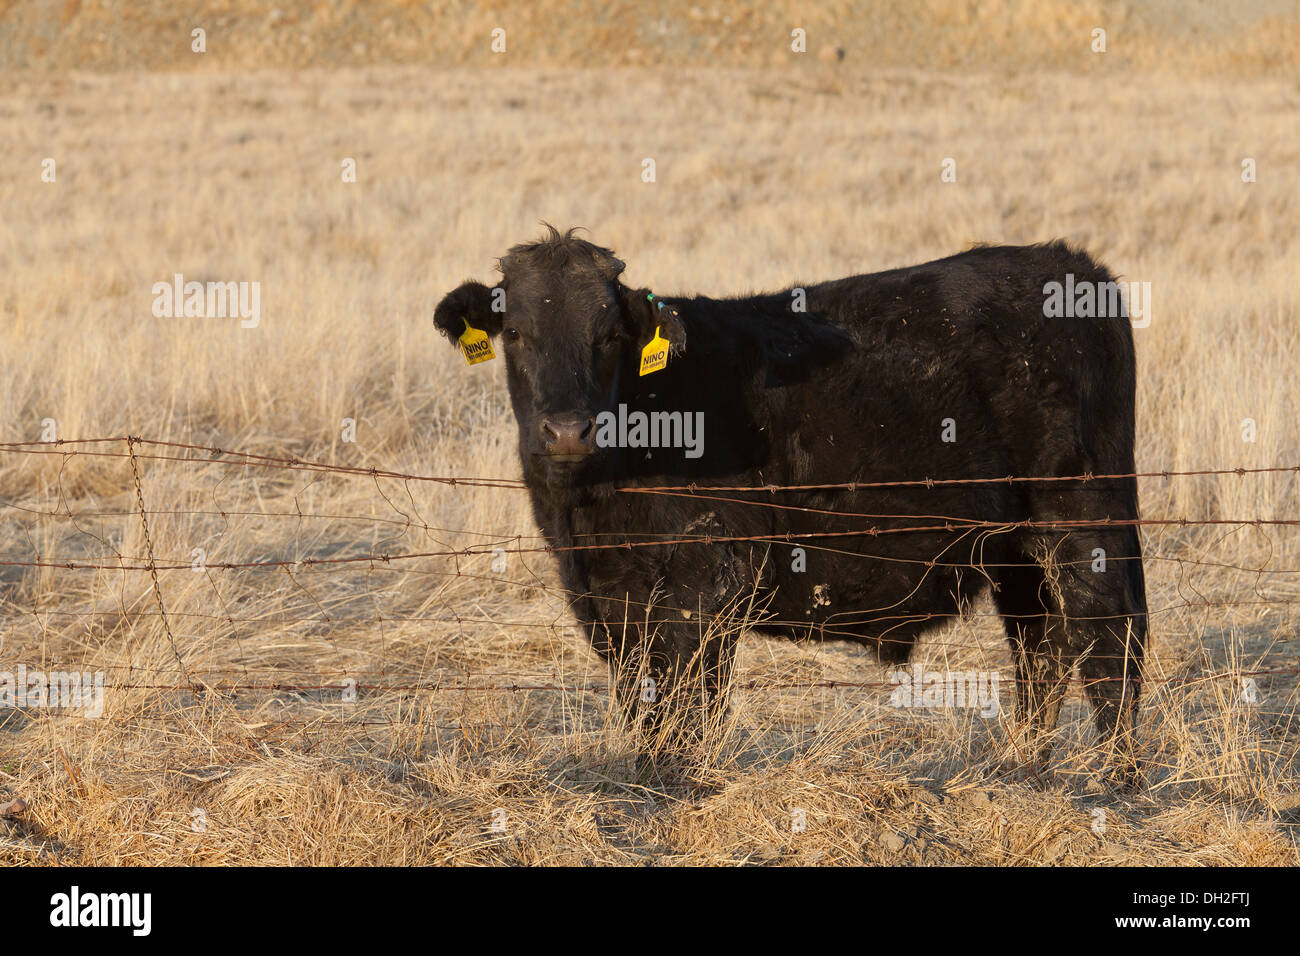 Angus cow in dry grass field - Coalinga, California USA Stock Photo